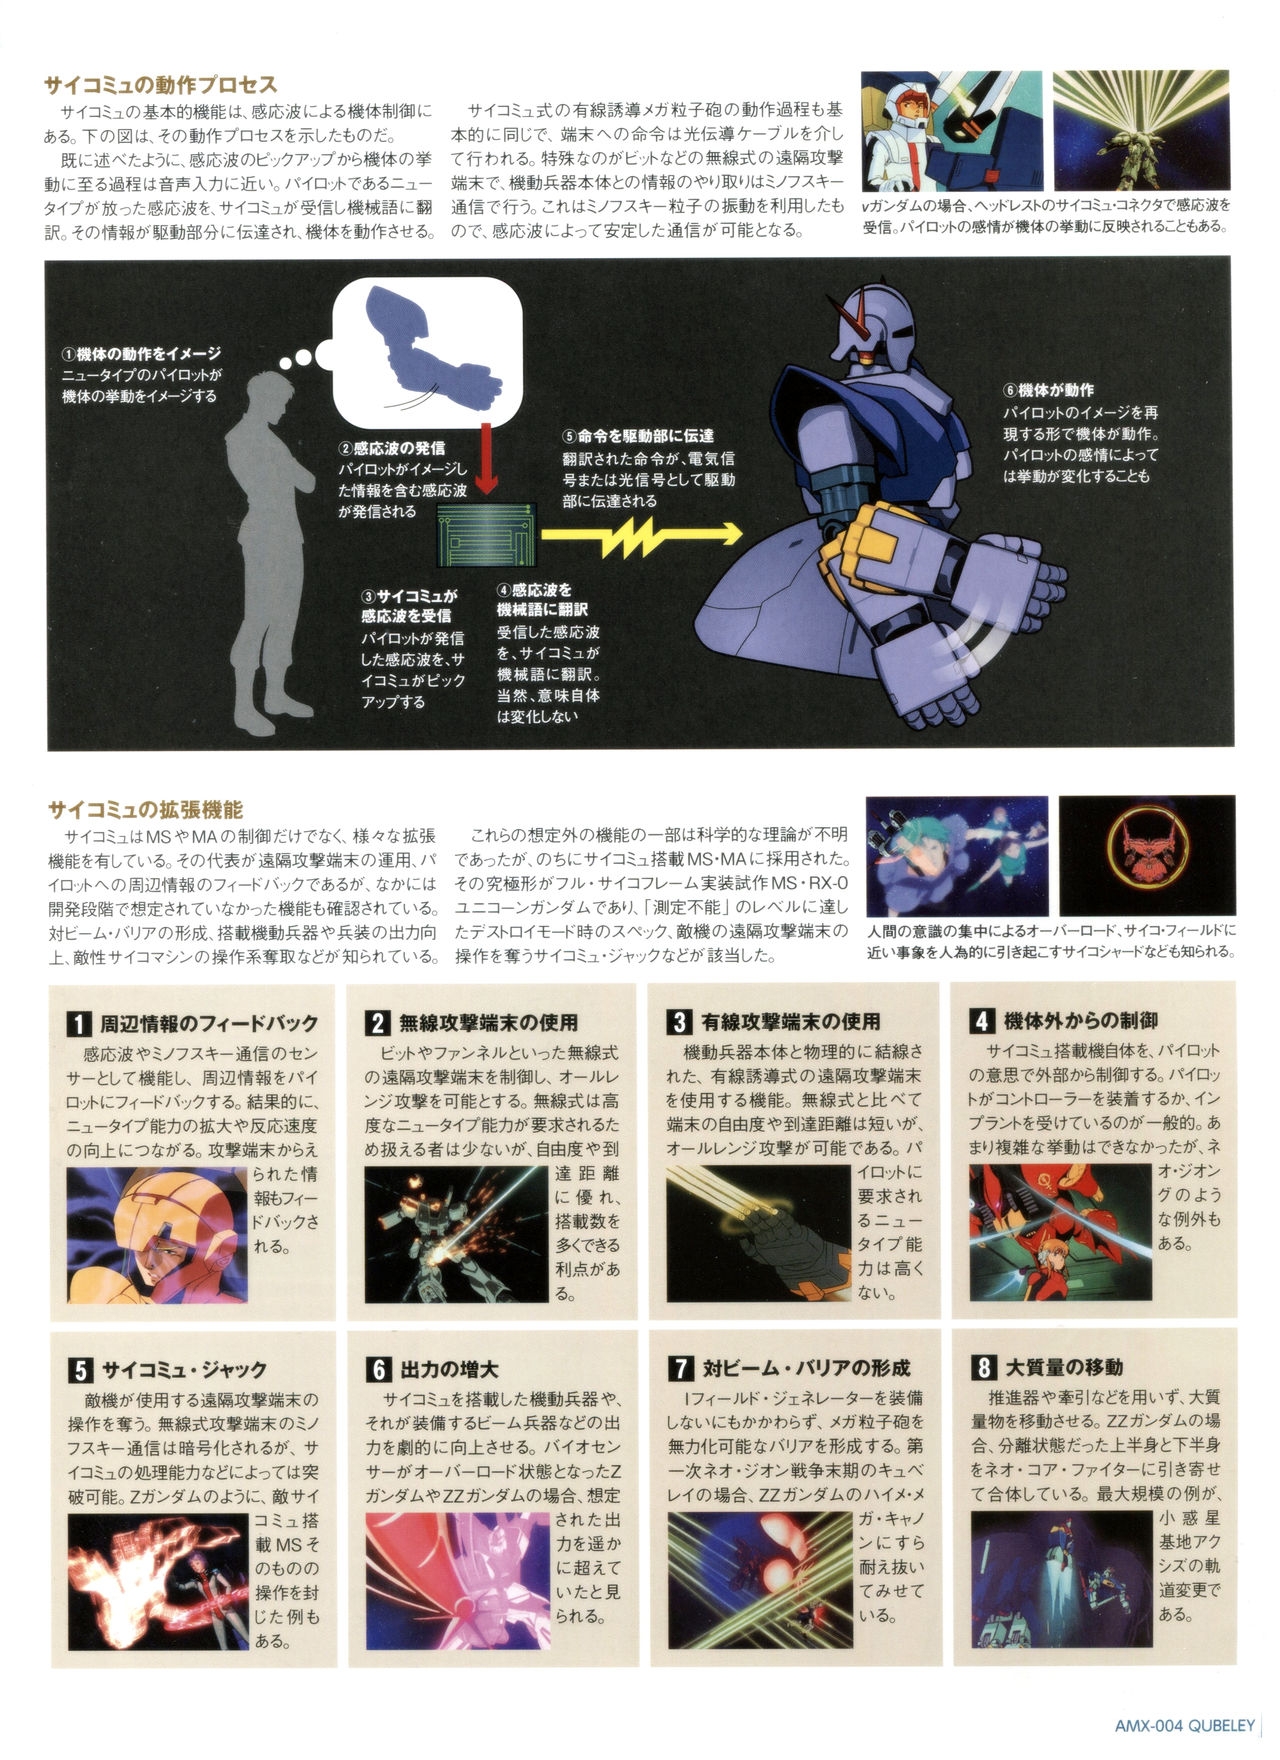 Gundam Mobile Suit Bible 17 26